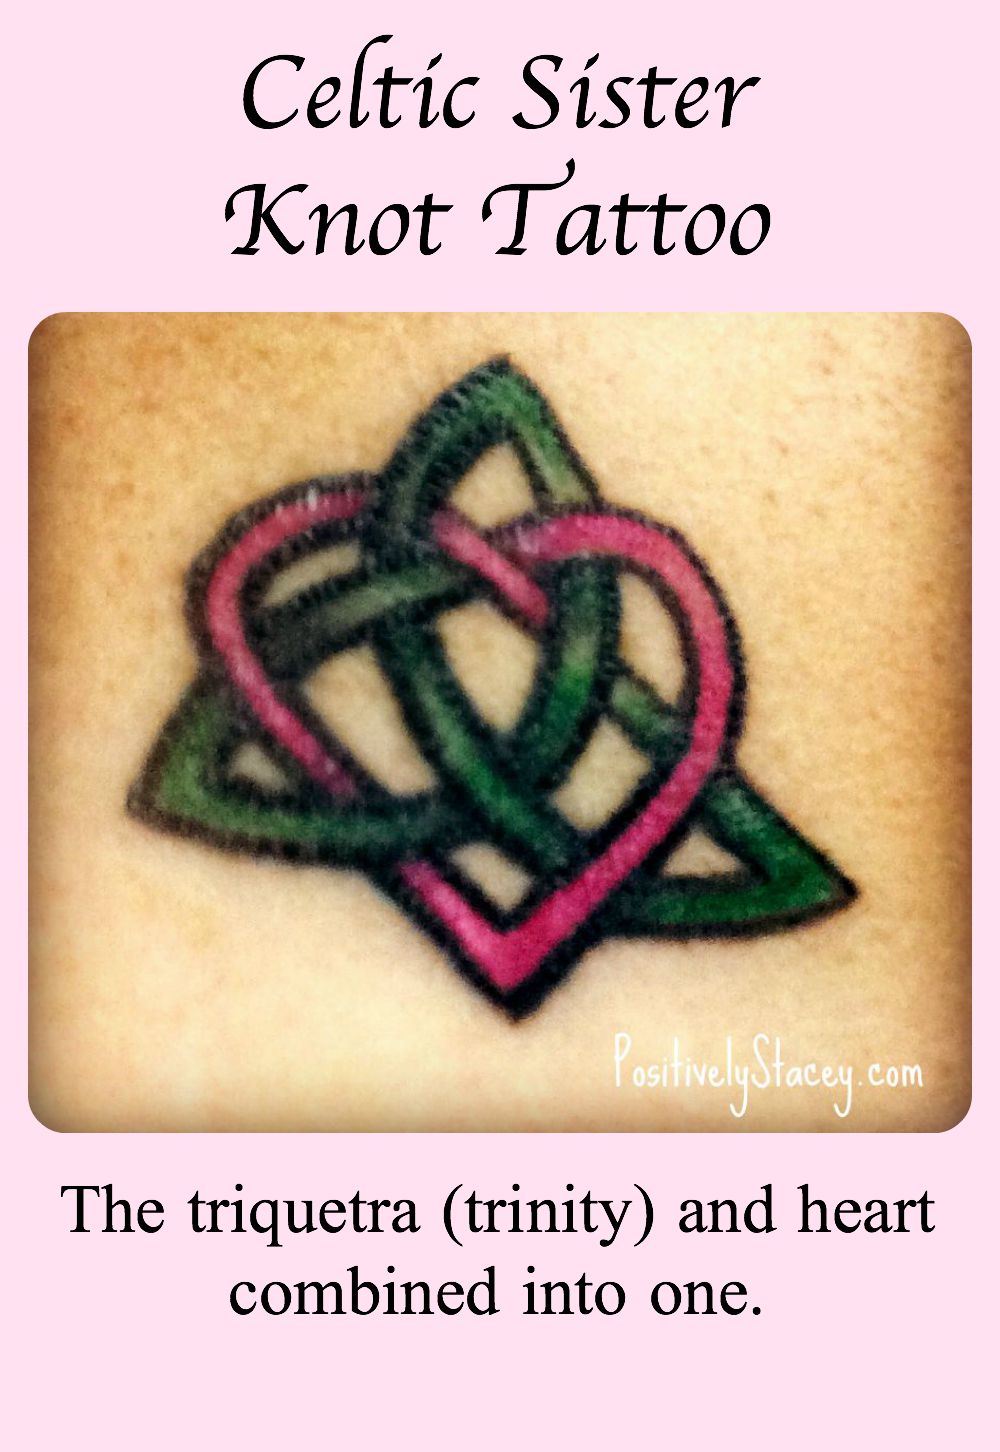 A Celtic Sister Knot Tattoo